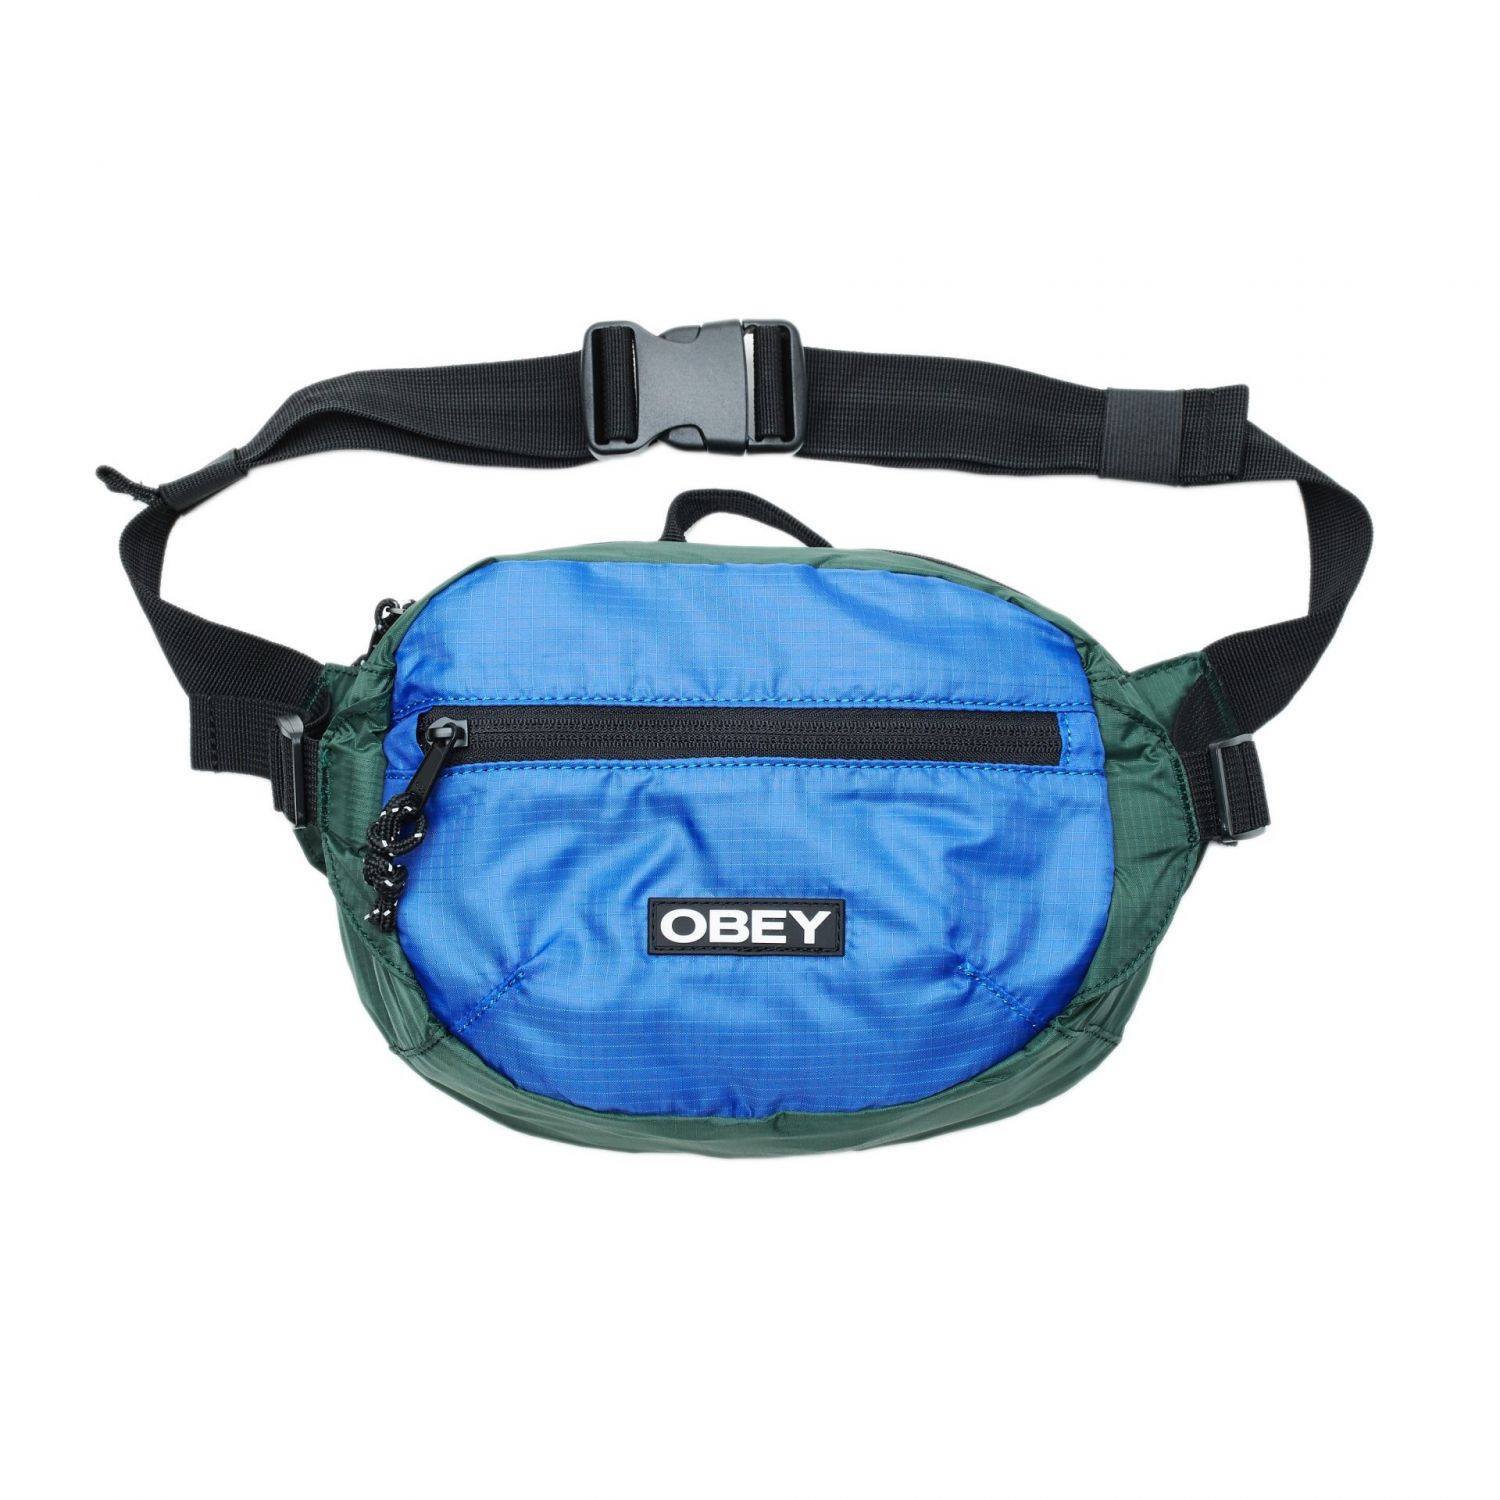 Obey Commuter Waist Bag - Blue/ Multi